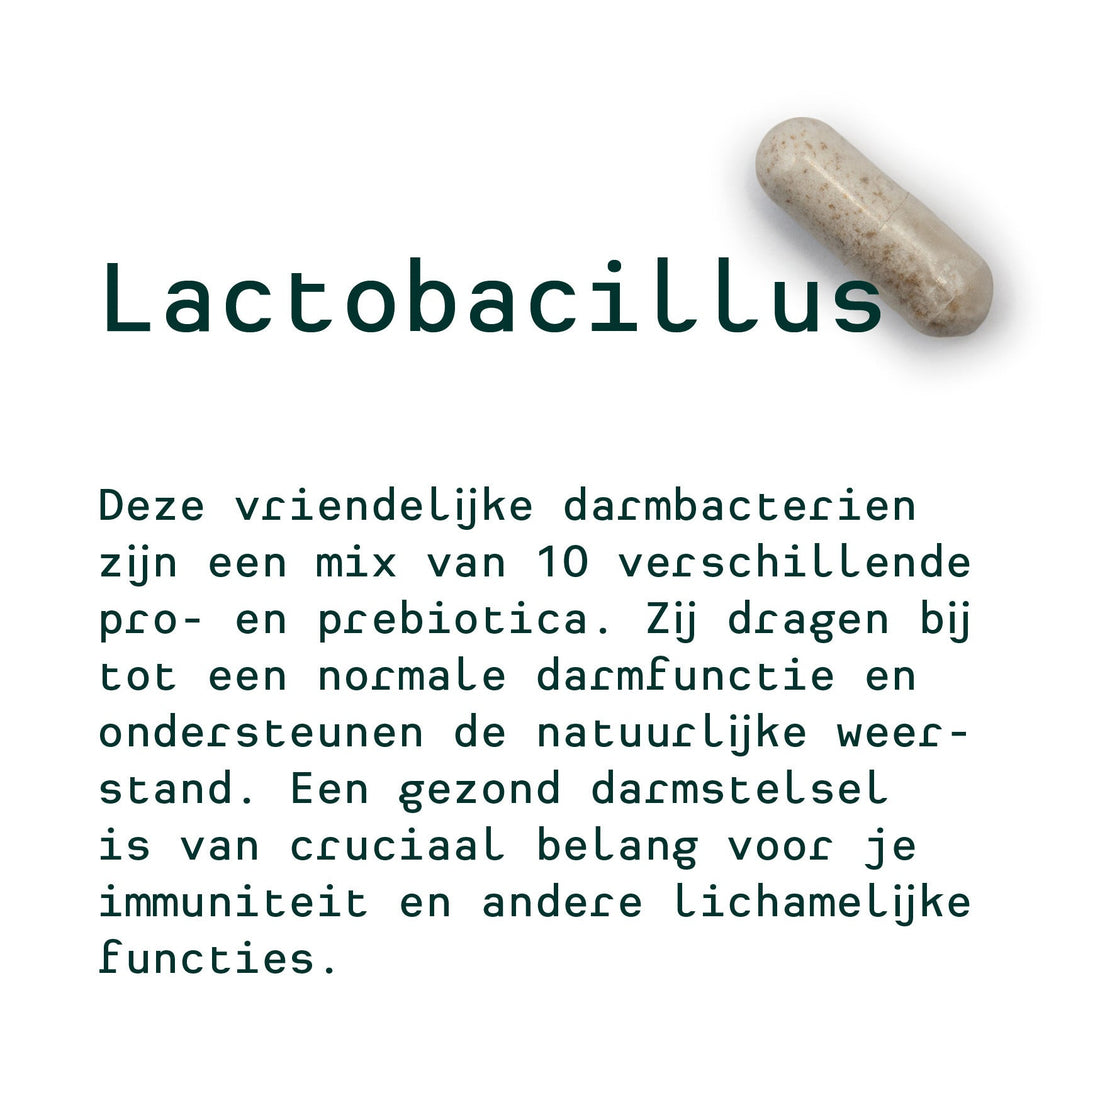 Metis Personalised Van Cindy (Bamboo & Olive Blad, Lactobacillus, Transit)